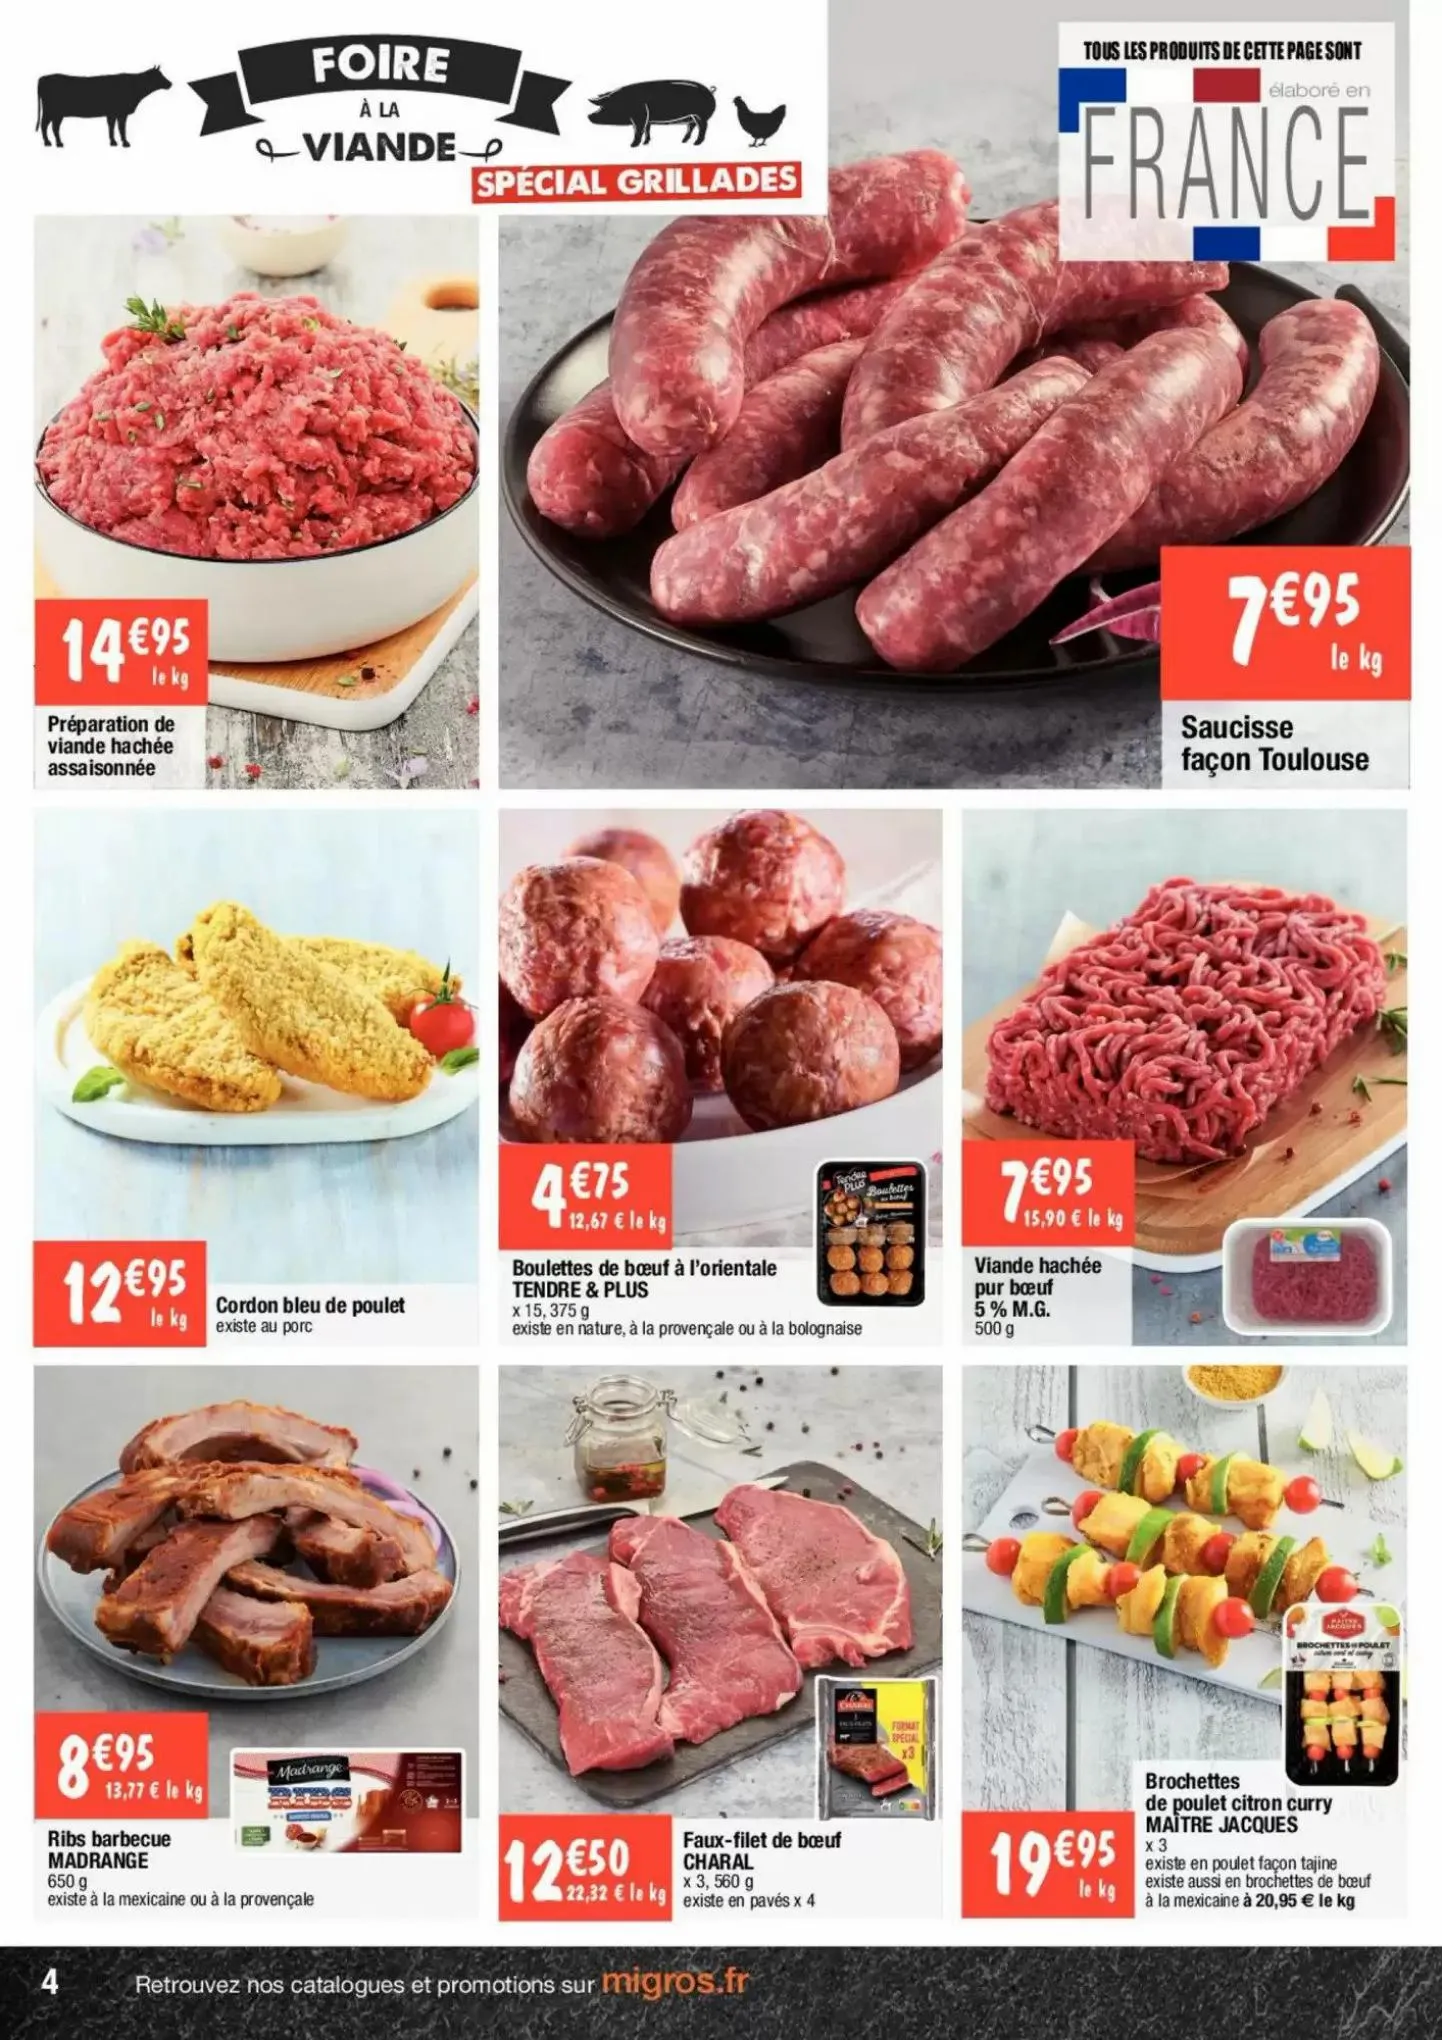 Catalogue Foire a la viande!, page 00004